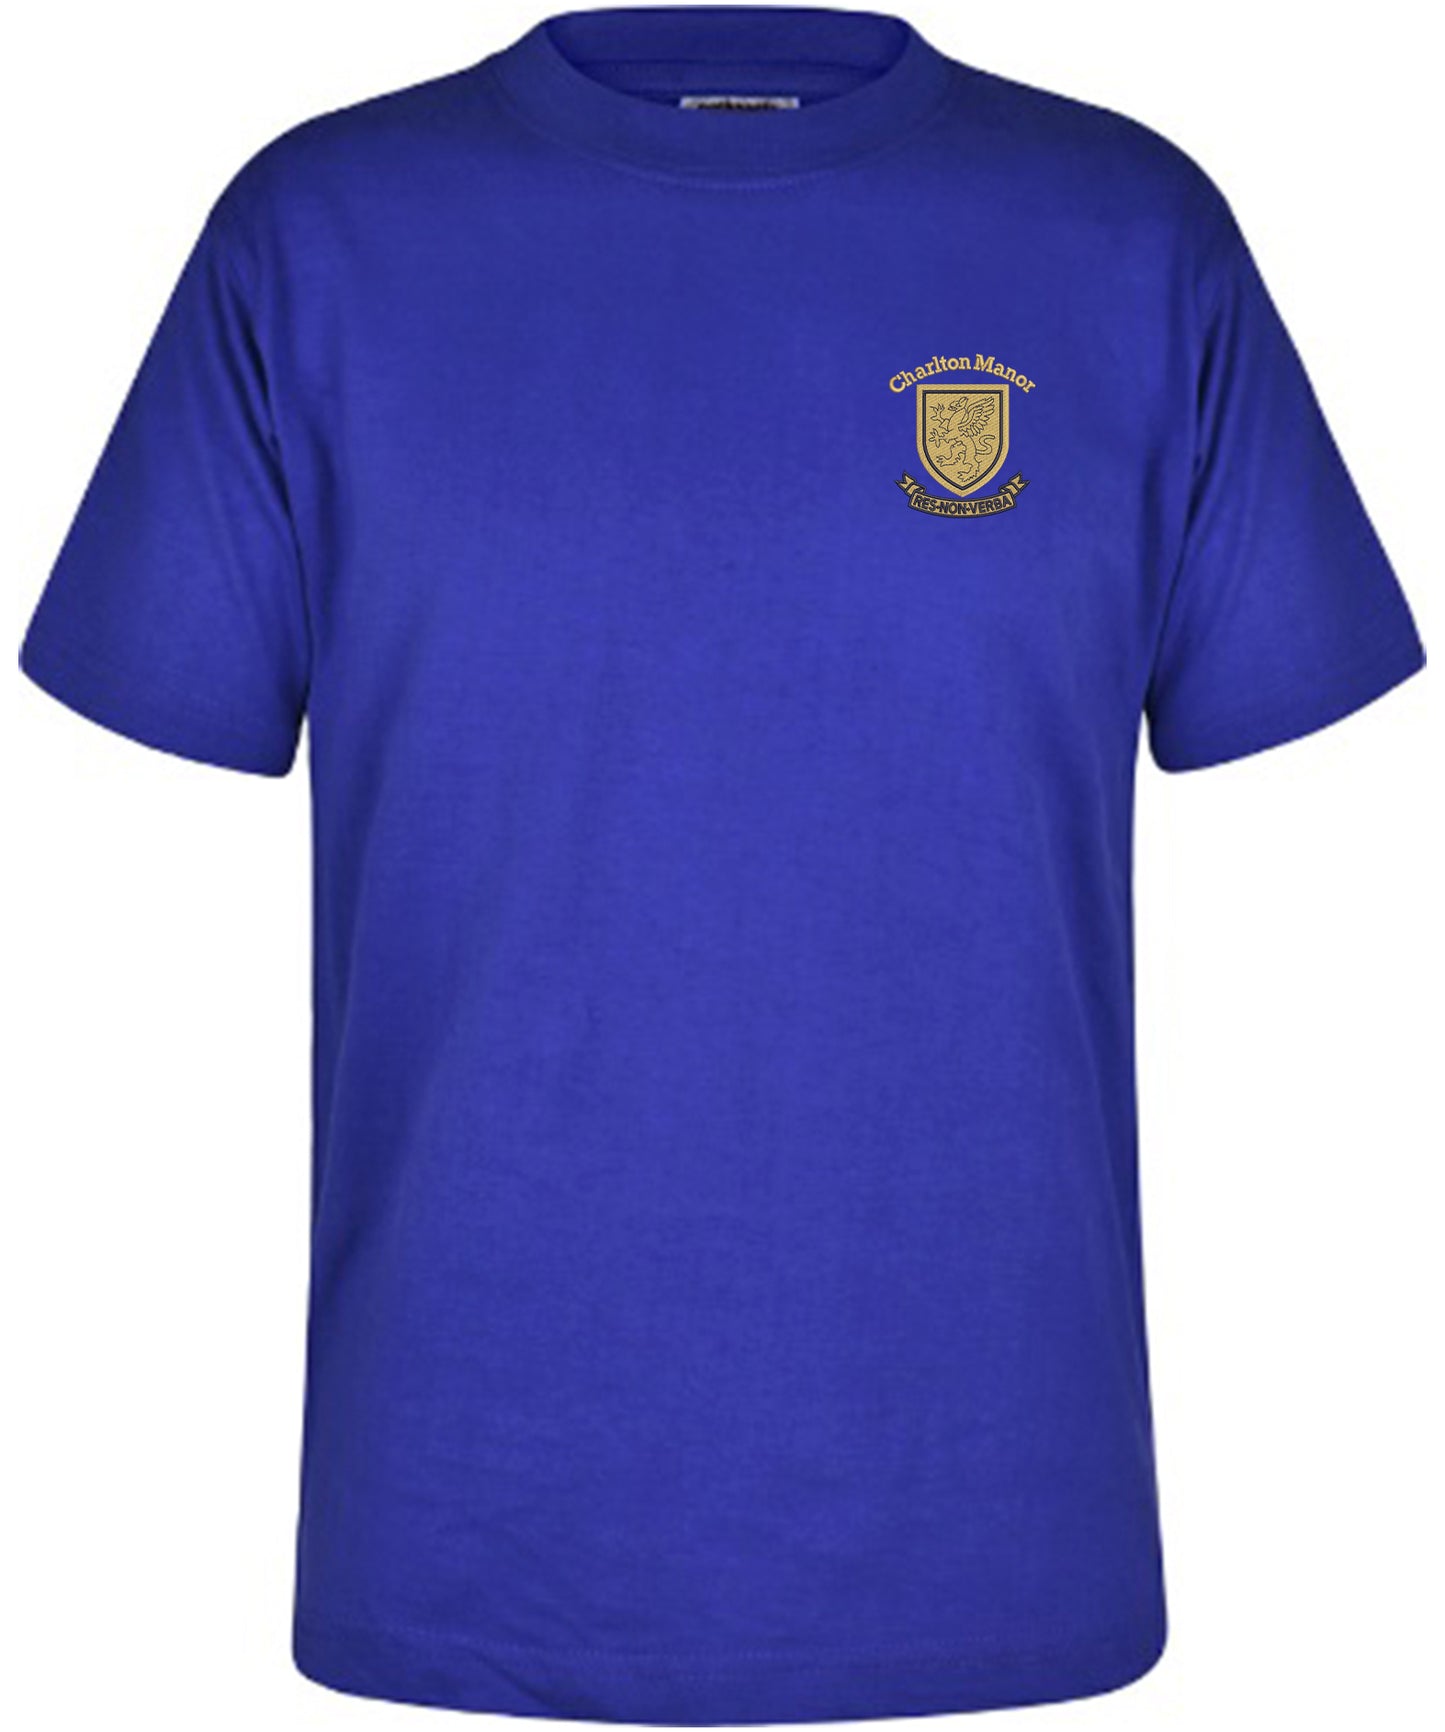 Charlton Manor Primary School - Unisex Cotton T-Shirt- Royal Blue